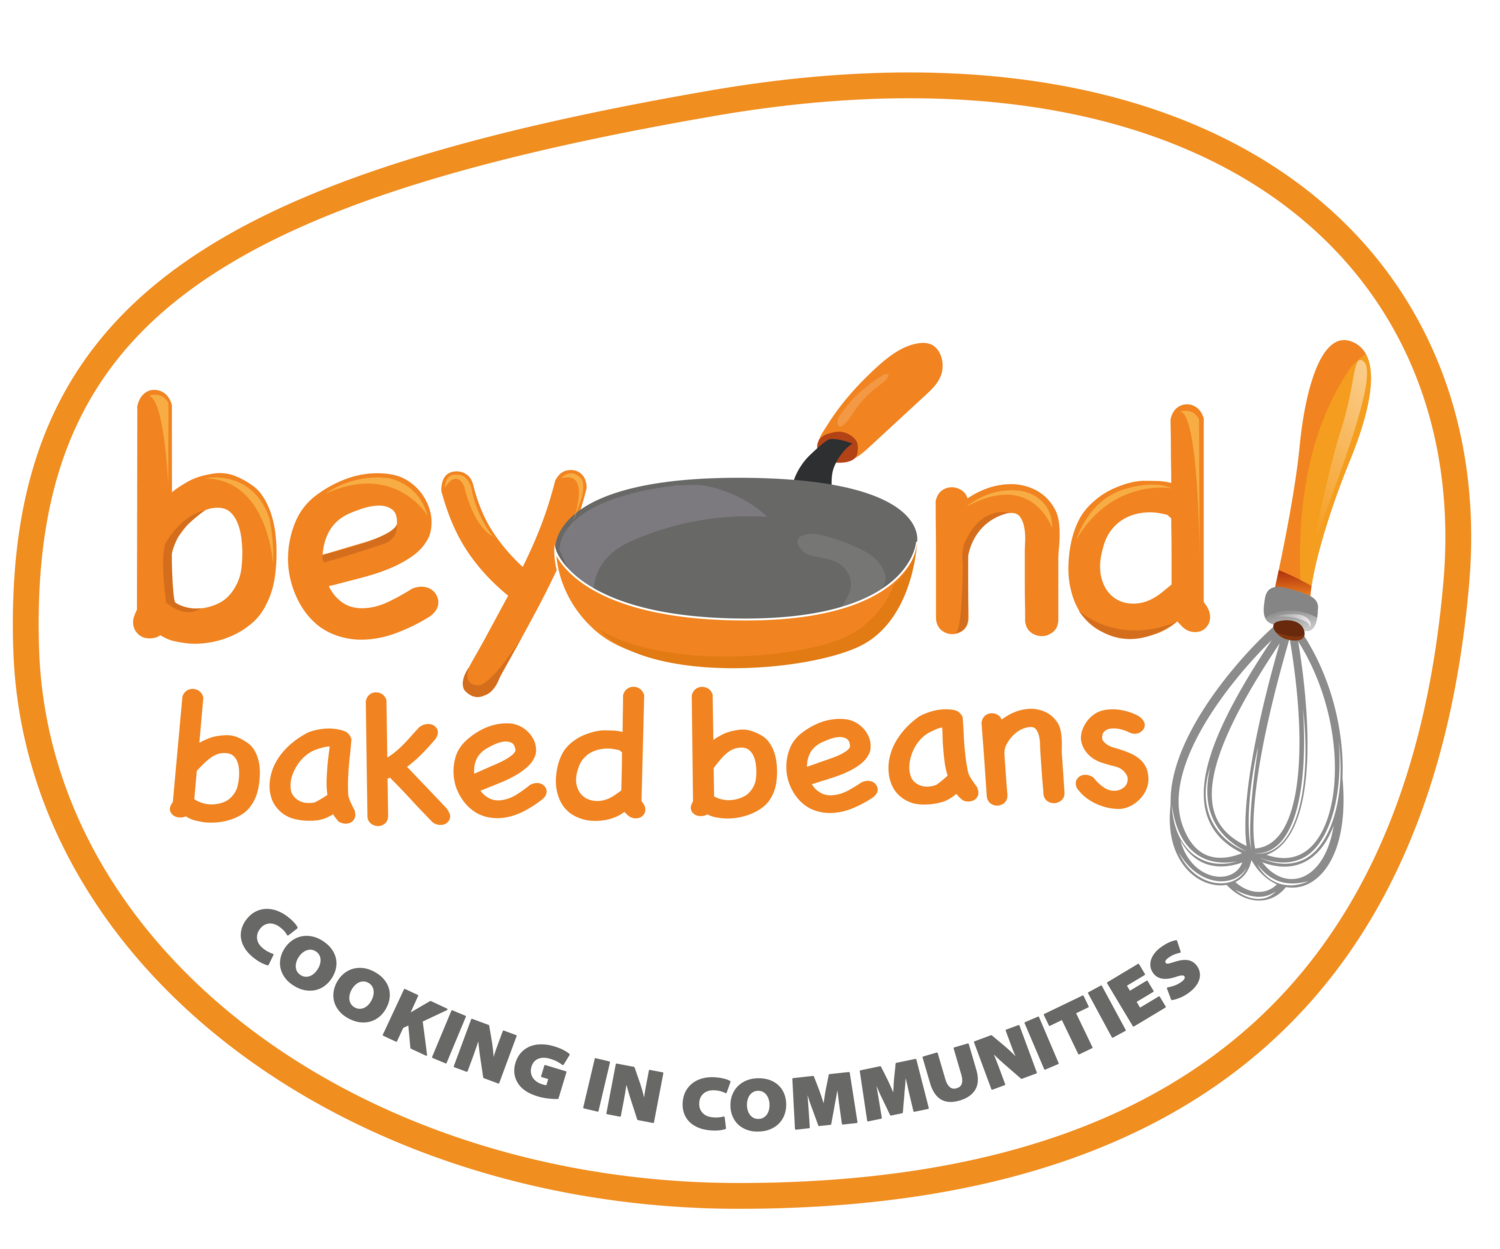 Beyond Baked Beans